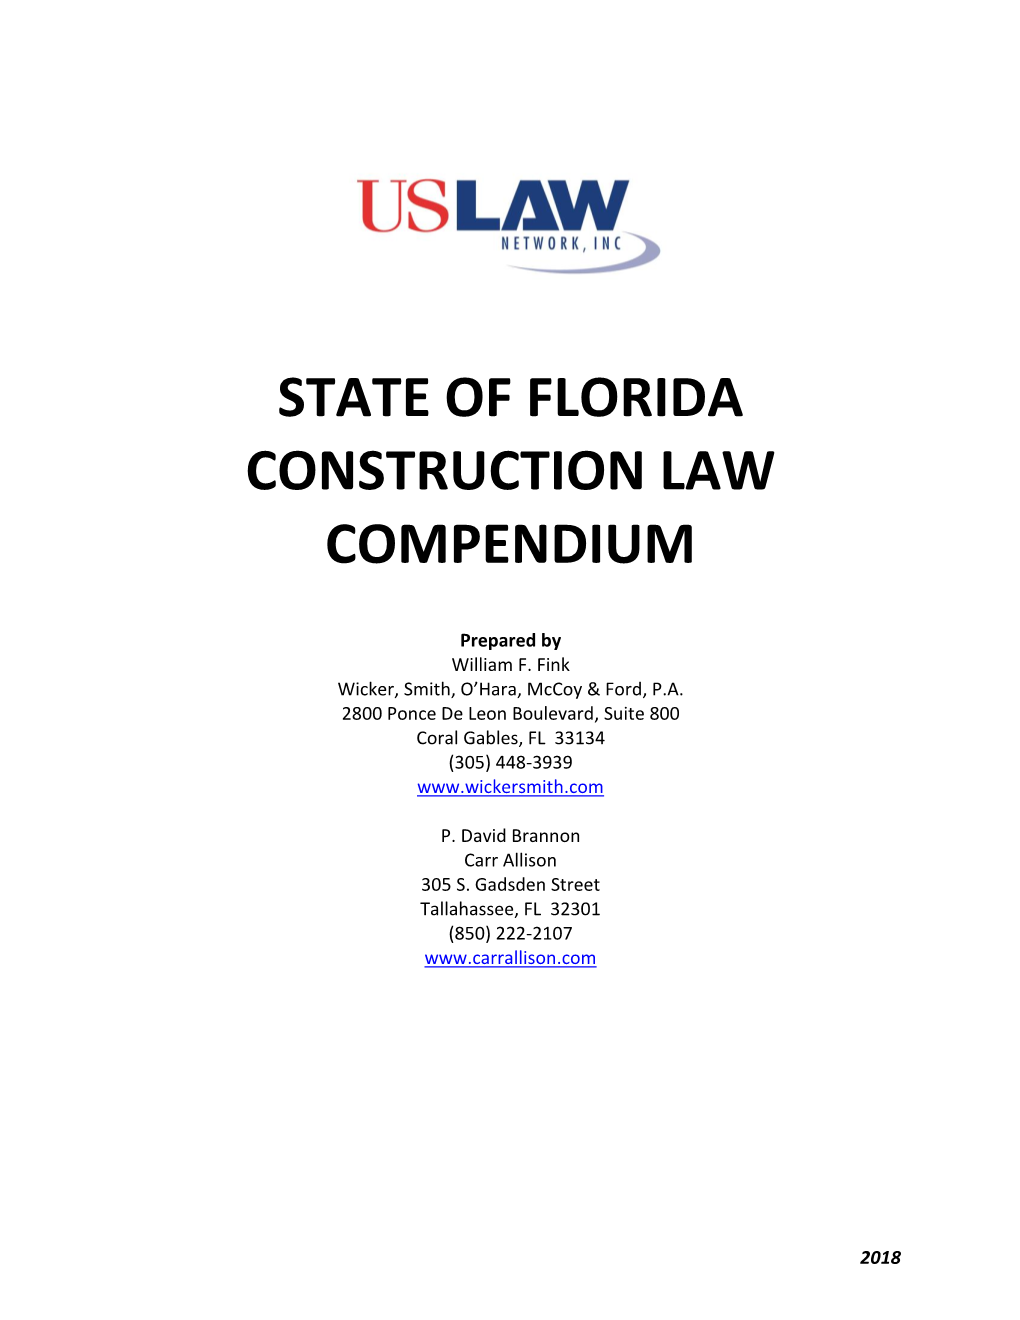 State of Florida Construction Law Compendium